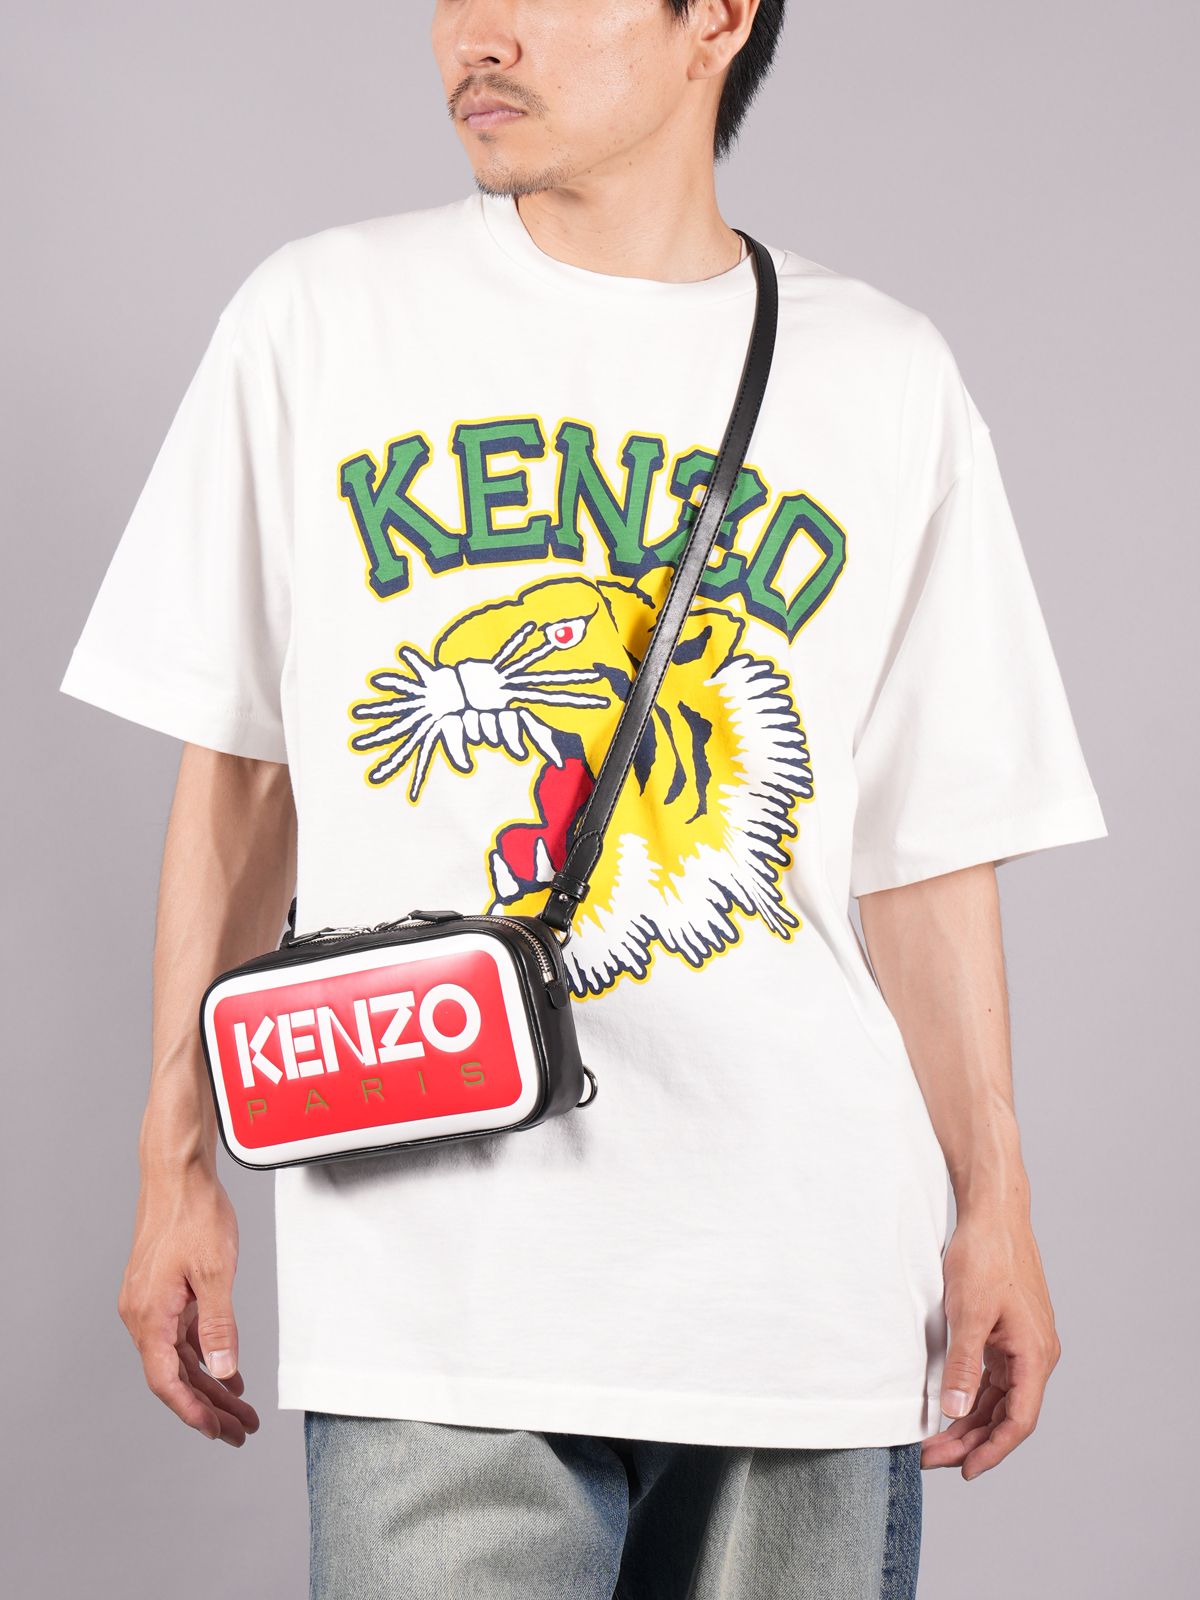 KENZO - 【ラスト1点】2 WAY CROSSBODY BAG / クロスボディーバック